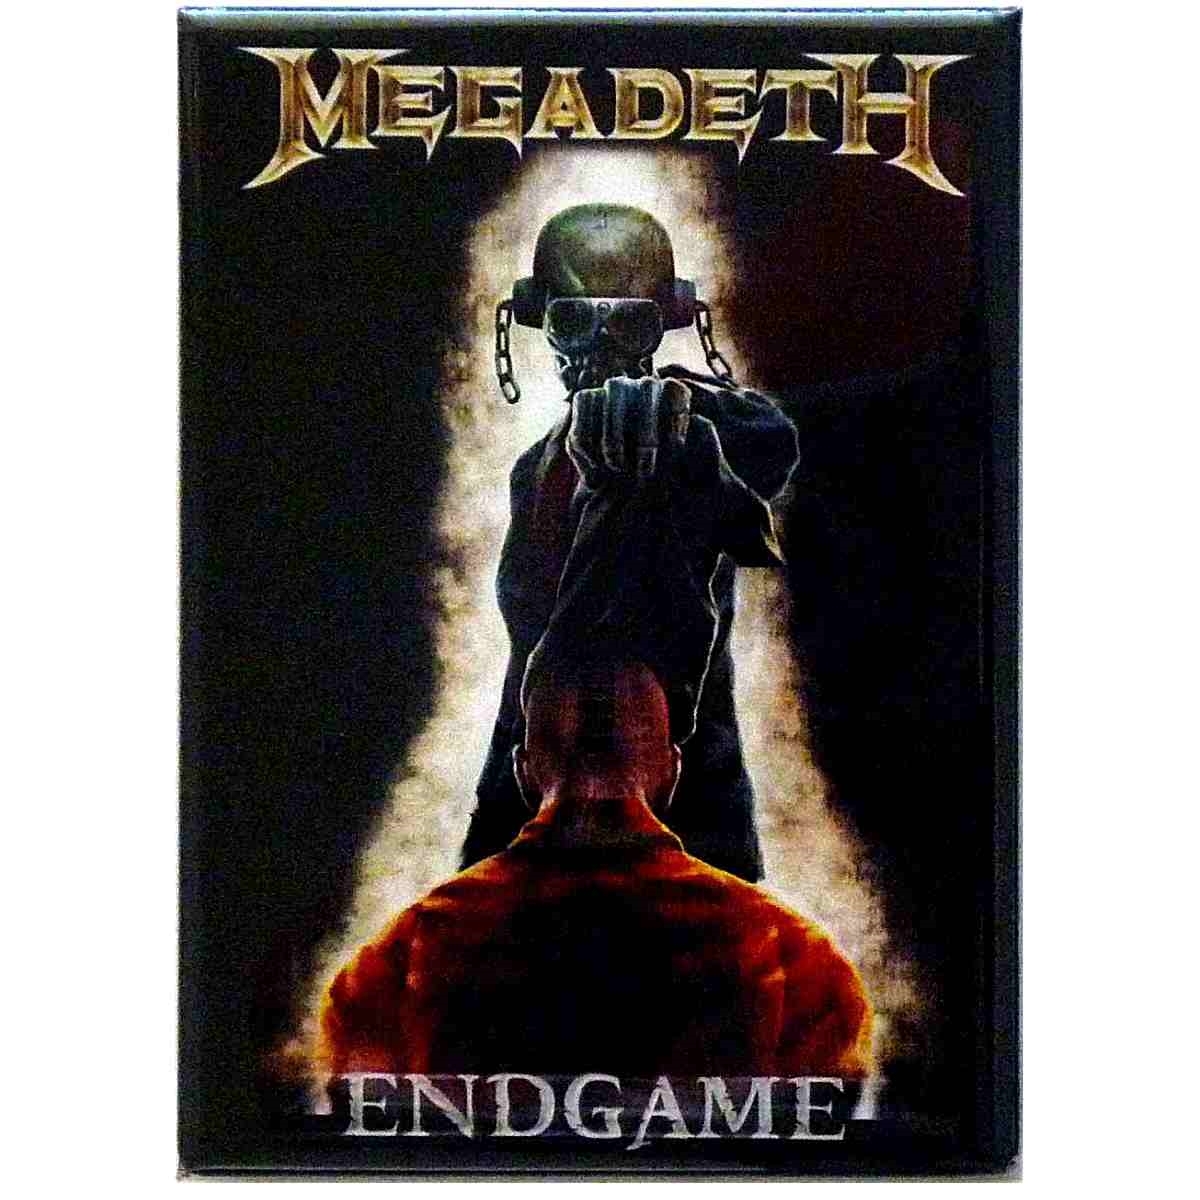 Megadeth endgame lyrics